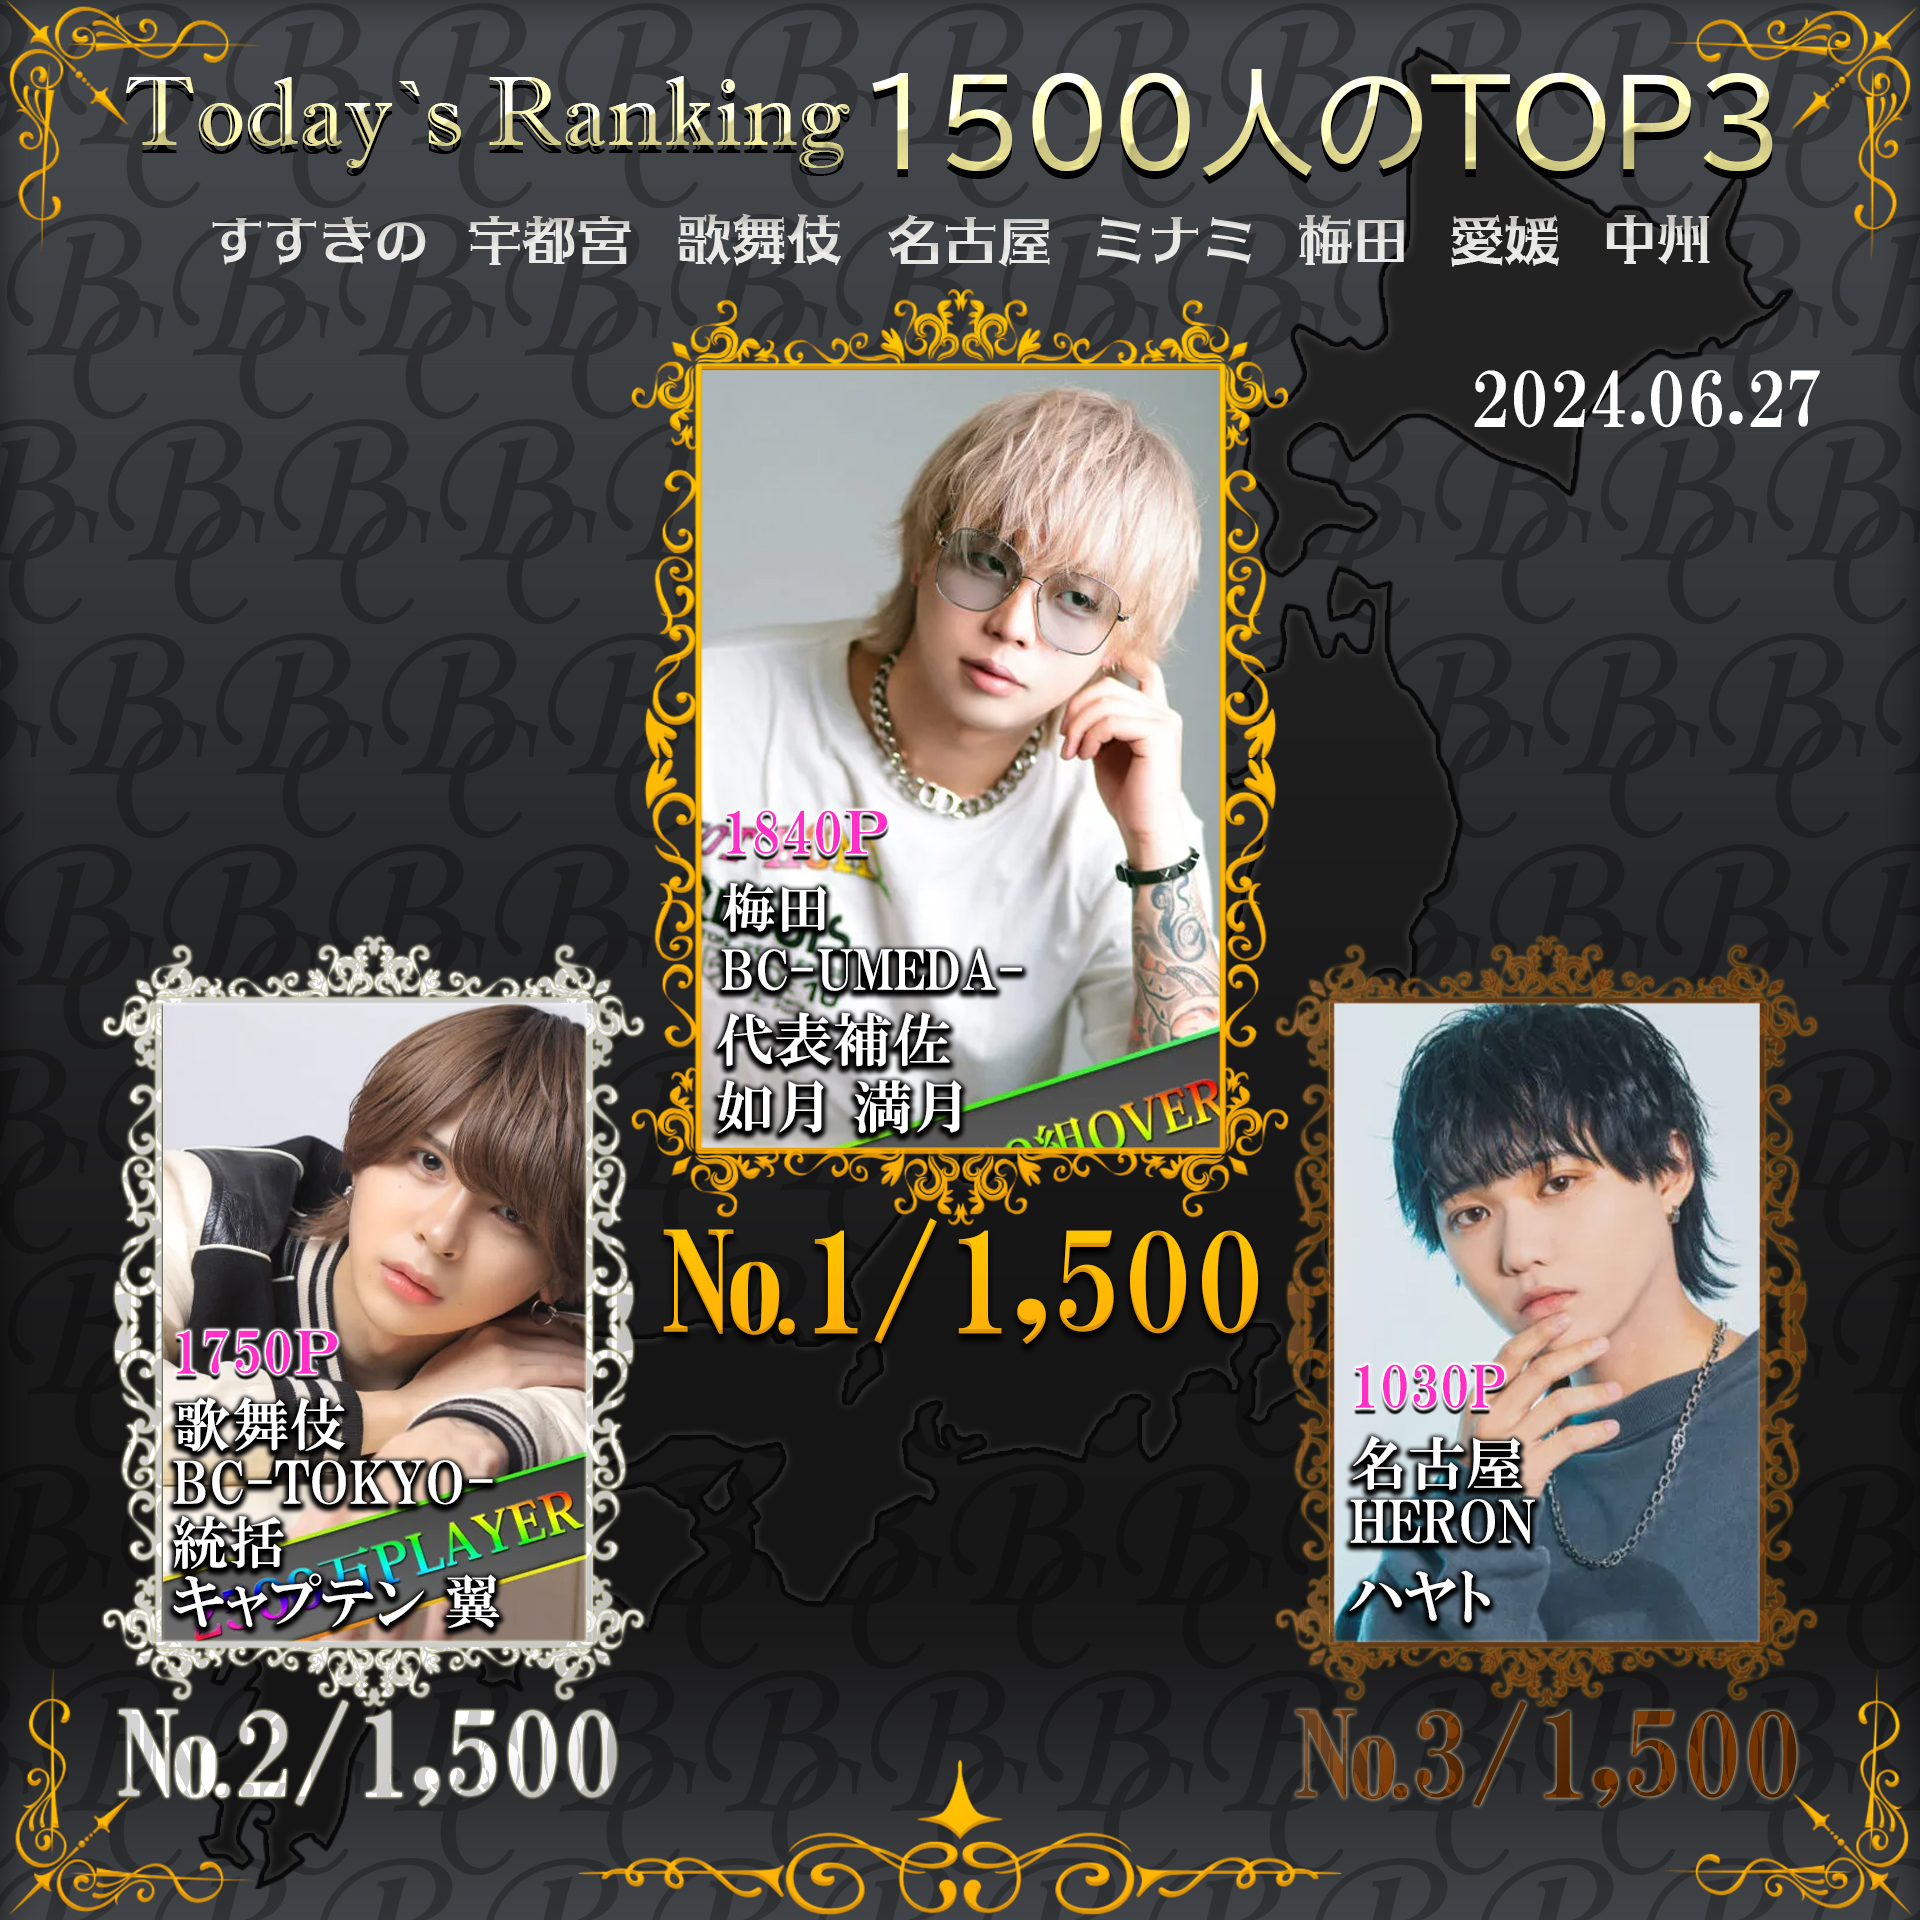 6/27 Today’s Ranking